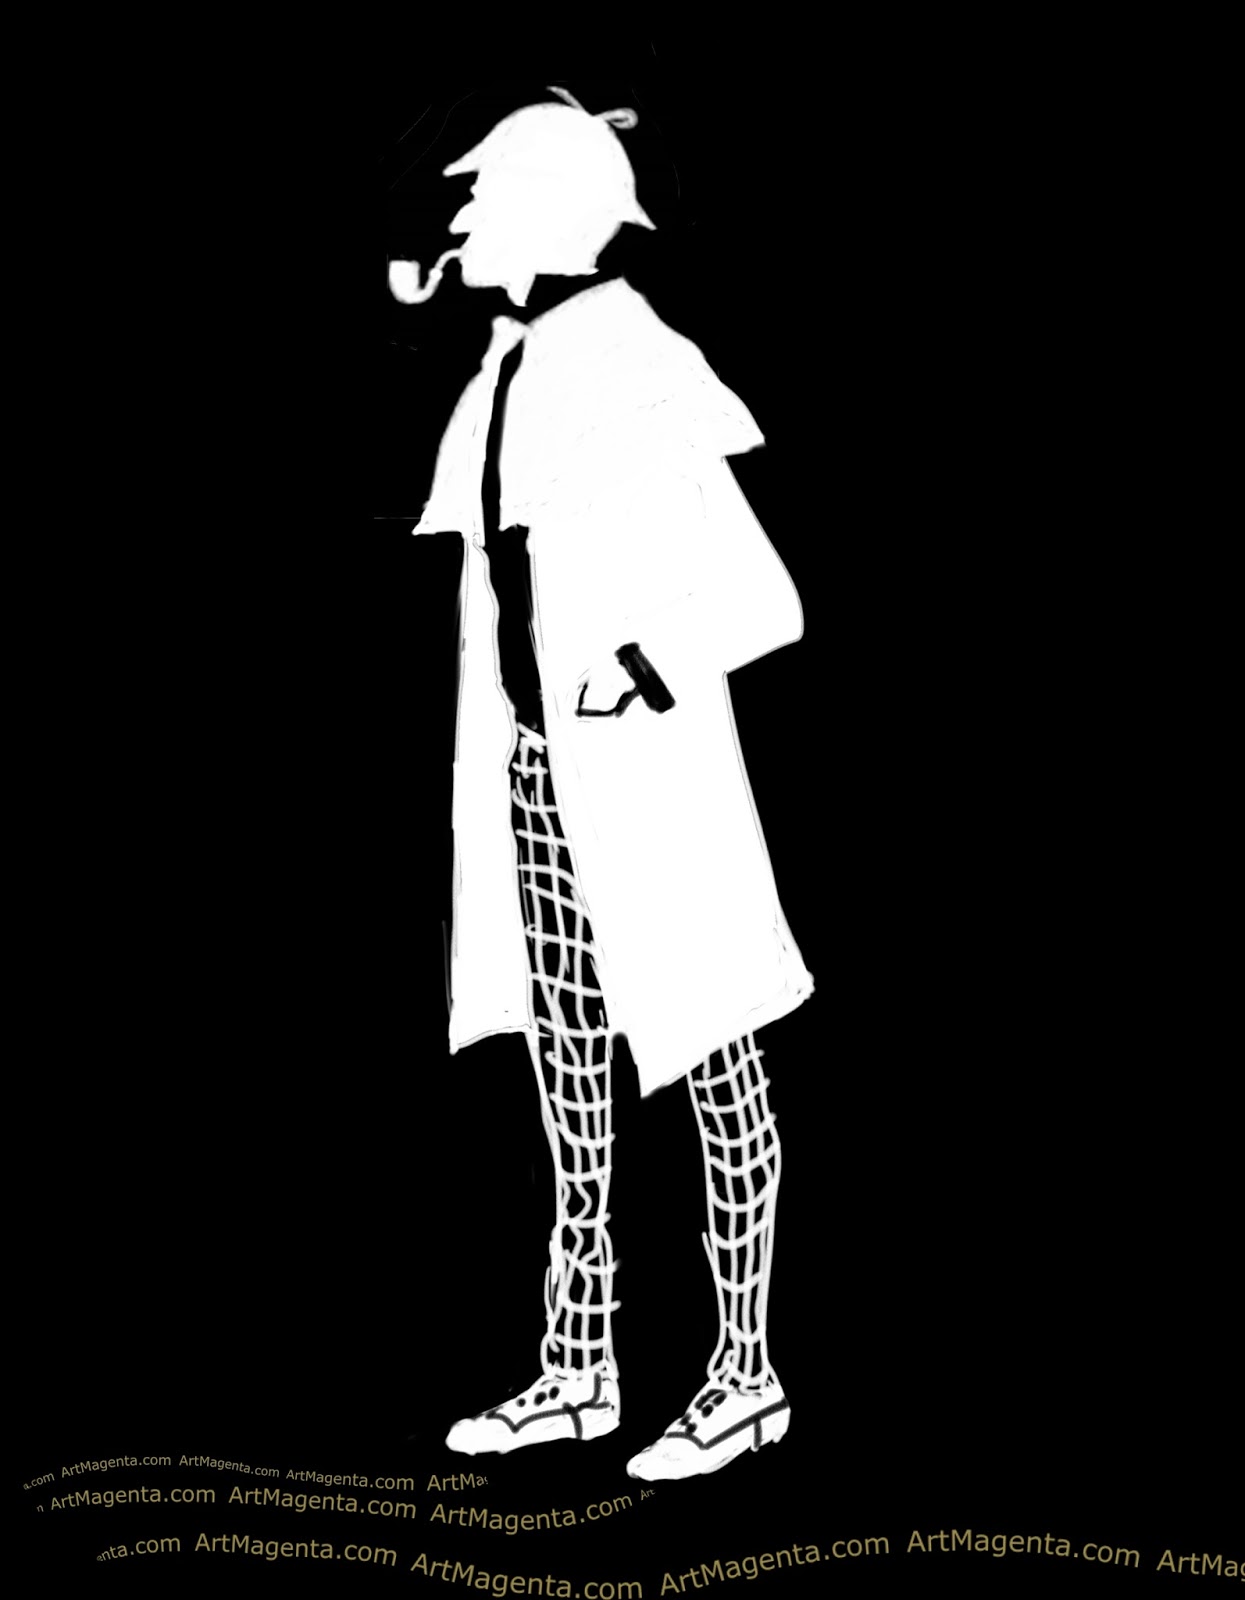 Sherlock Holmes caricature cartoon. Portrait drawing by caricaturist Artmagenta